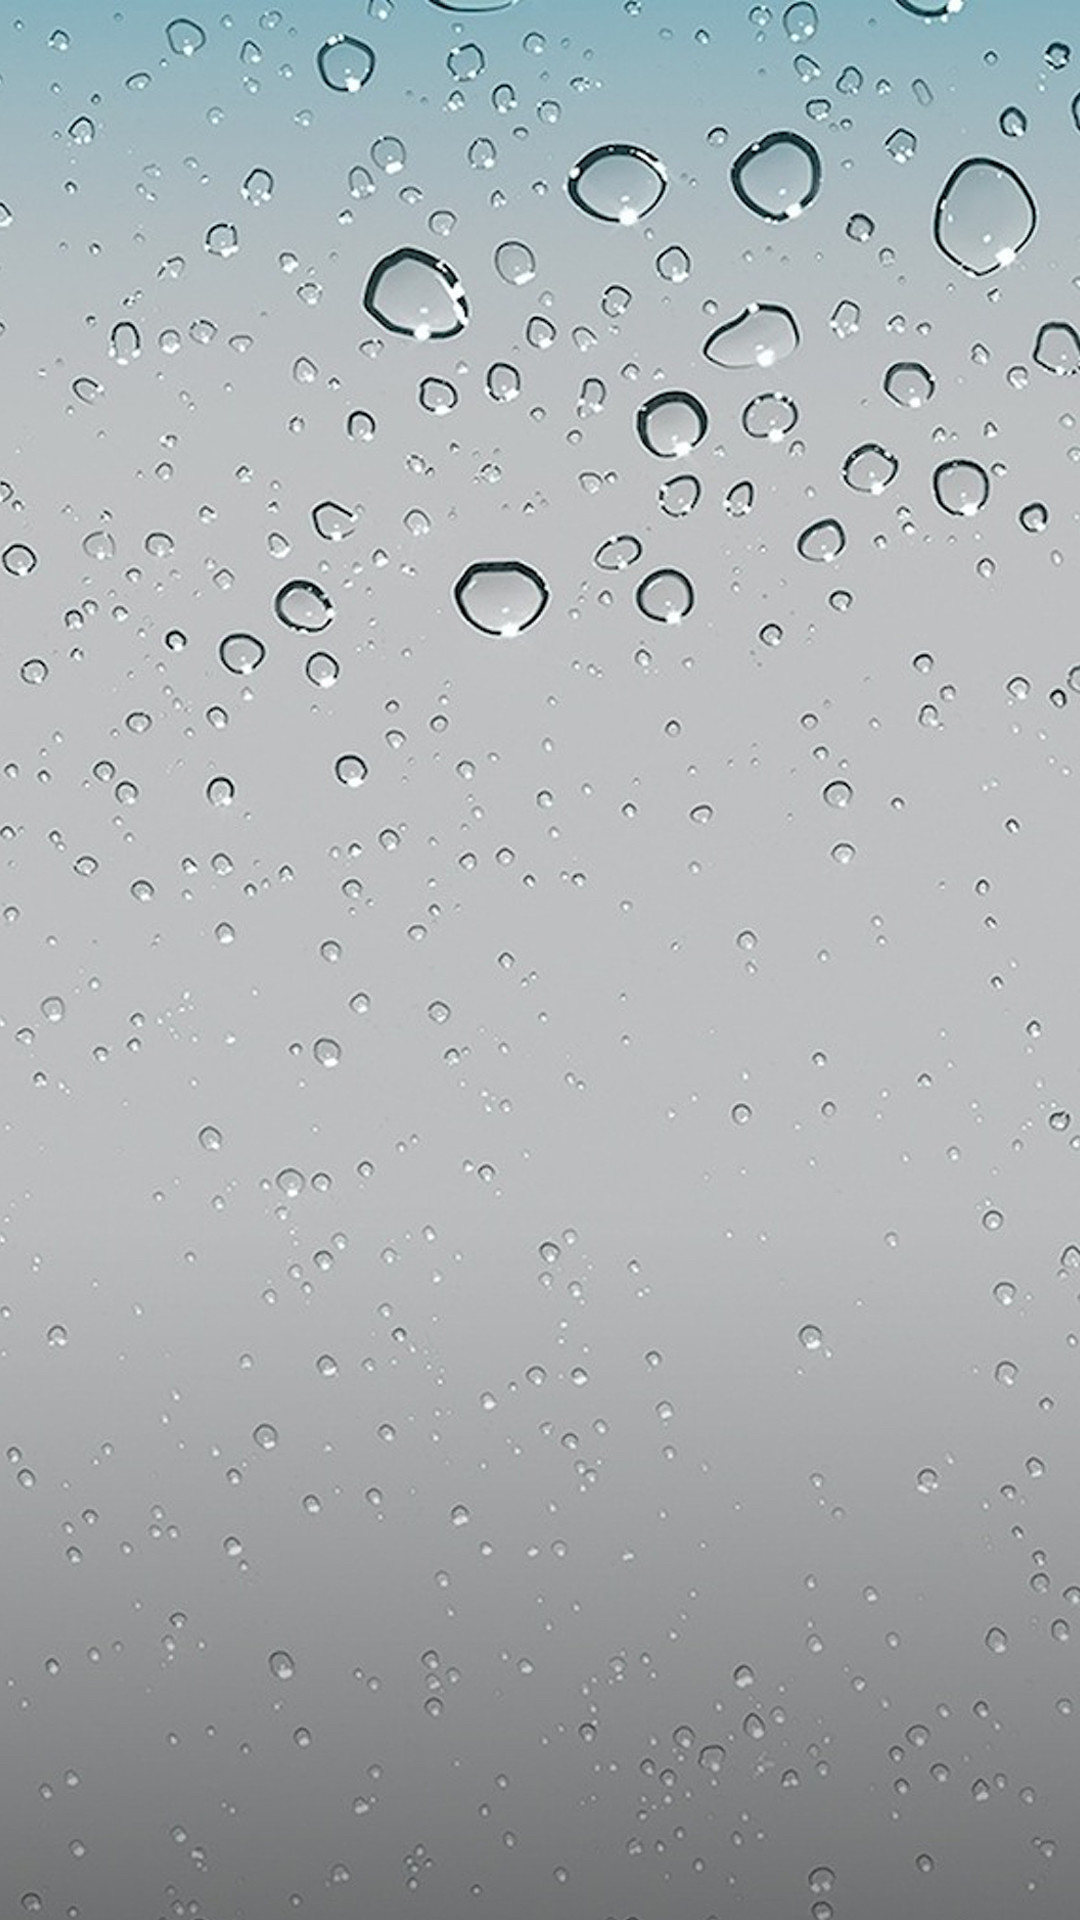 1080x1920 FREEIOS7 | raindrops-sadd - parallax HD iPhone iPad wallpaper ...